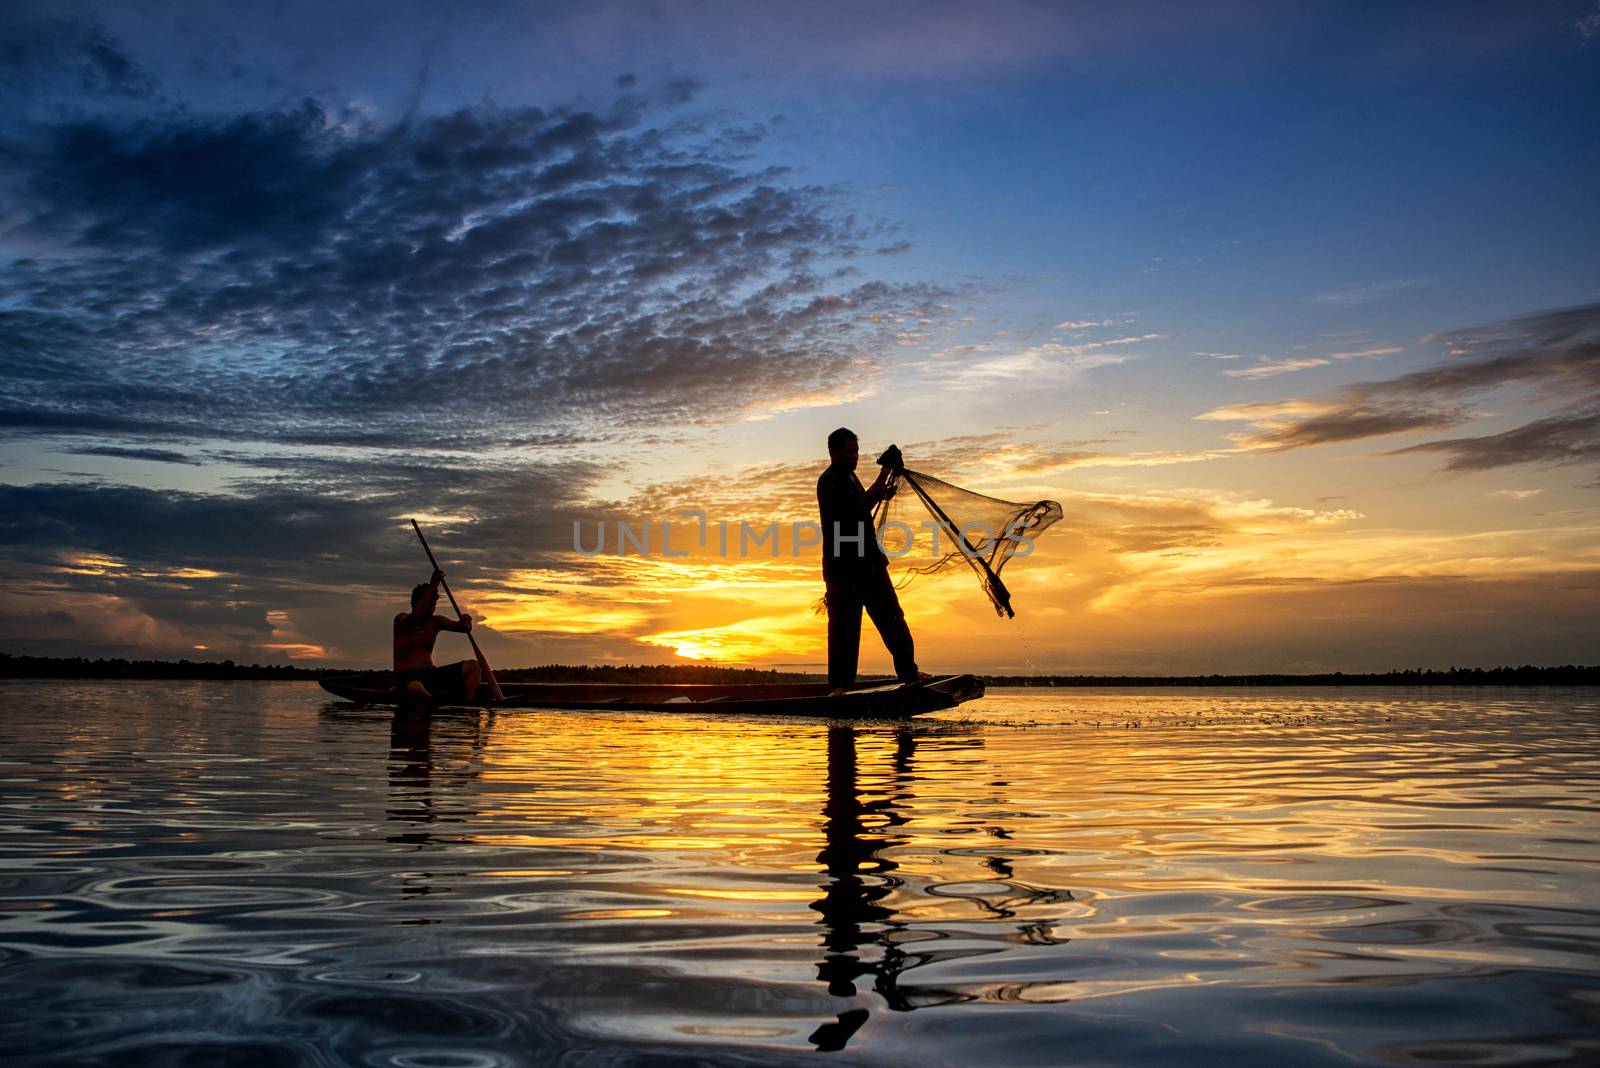 Silhouette of fish lift nets ,Wanonniwat ,Sakon Nakhon, Thailand